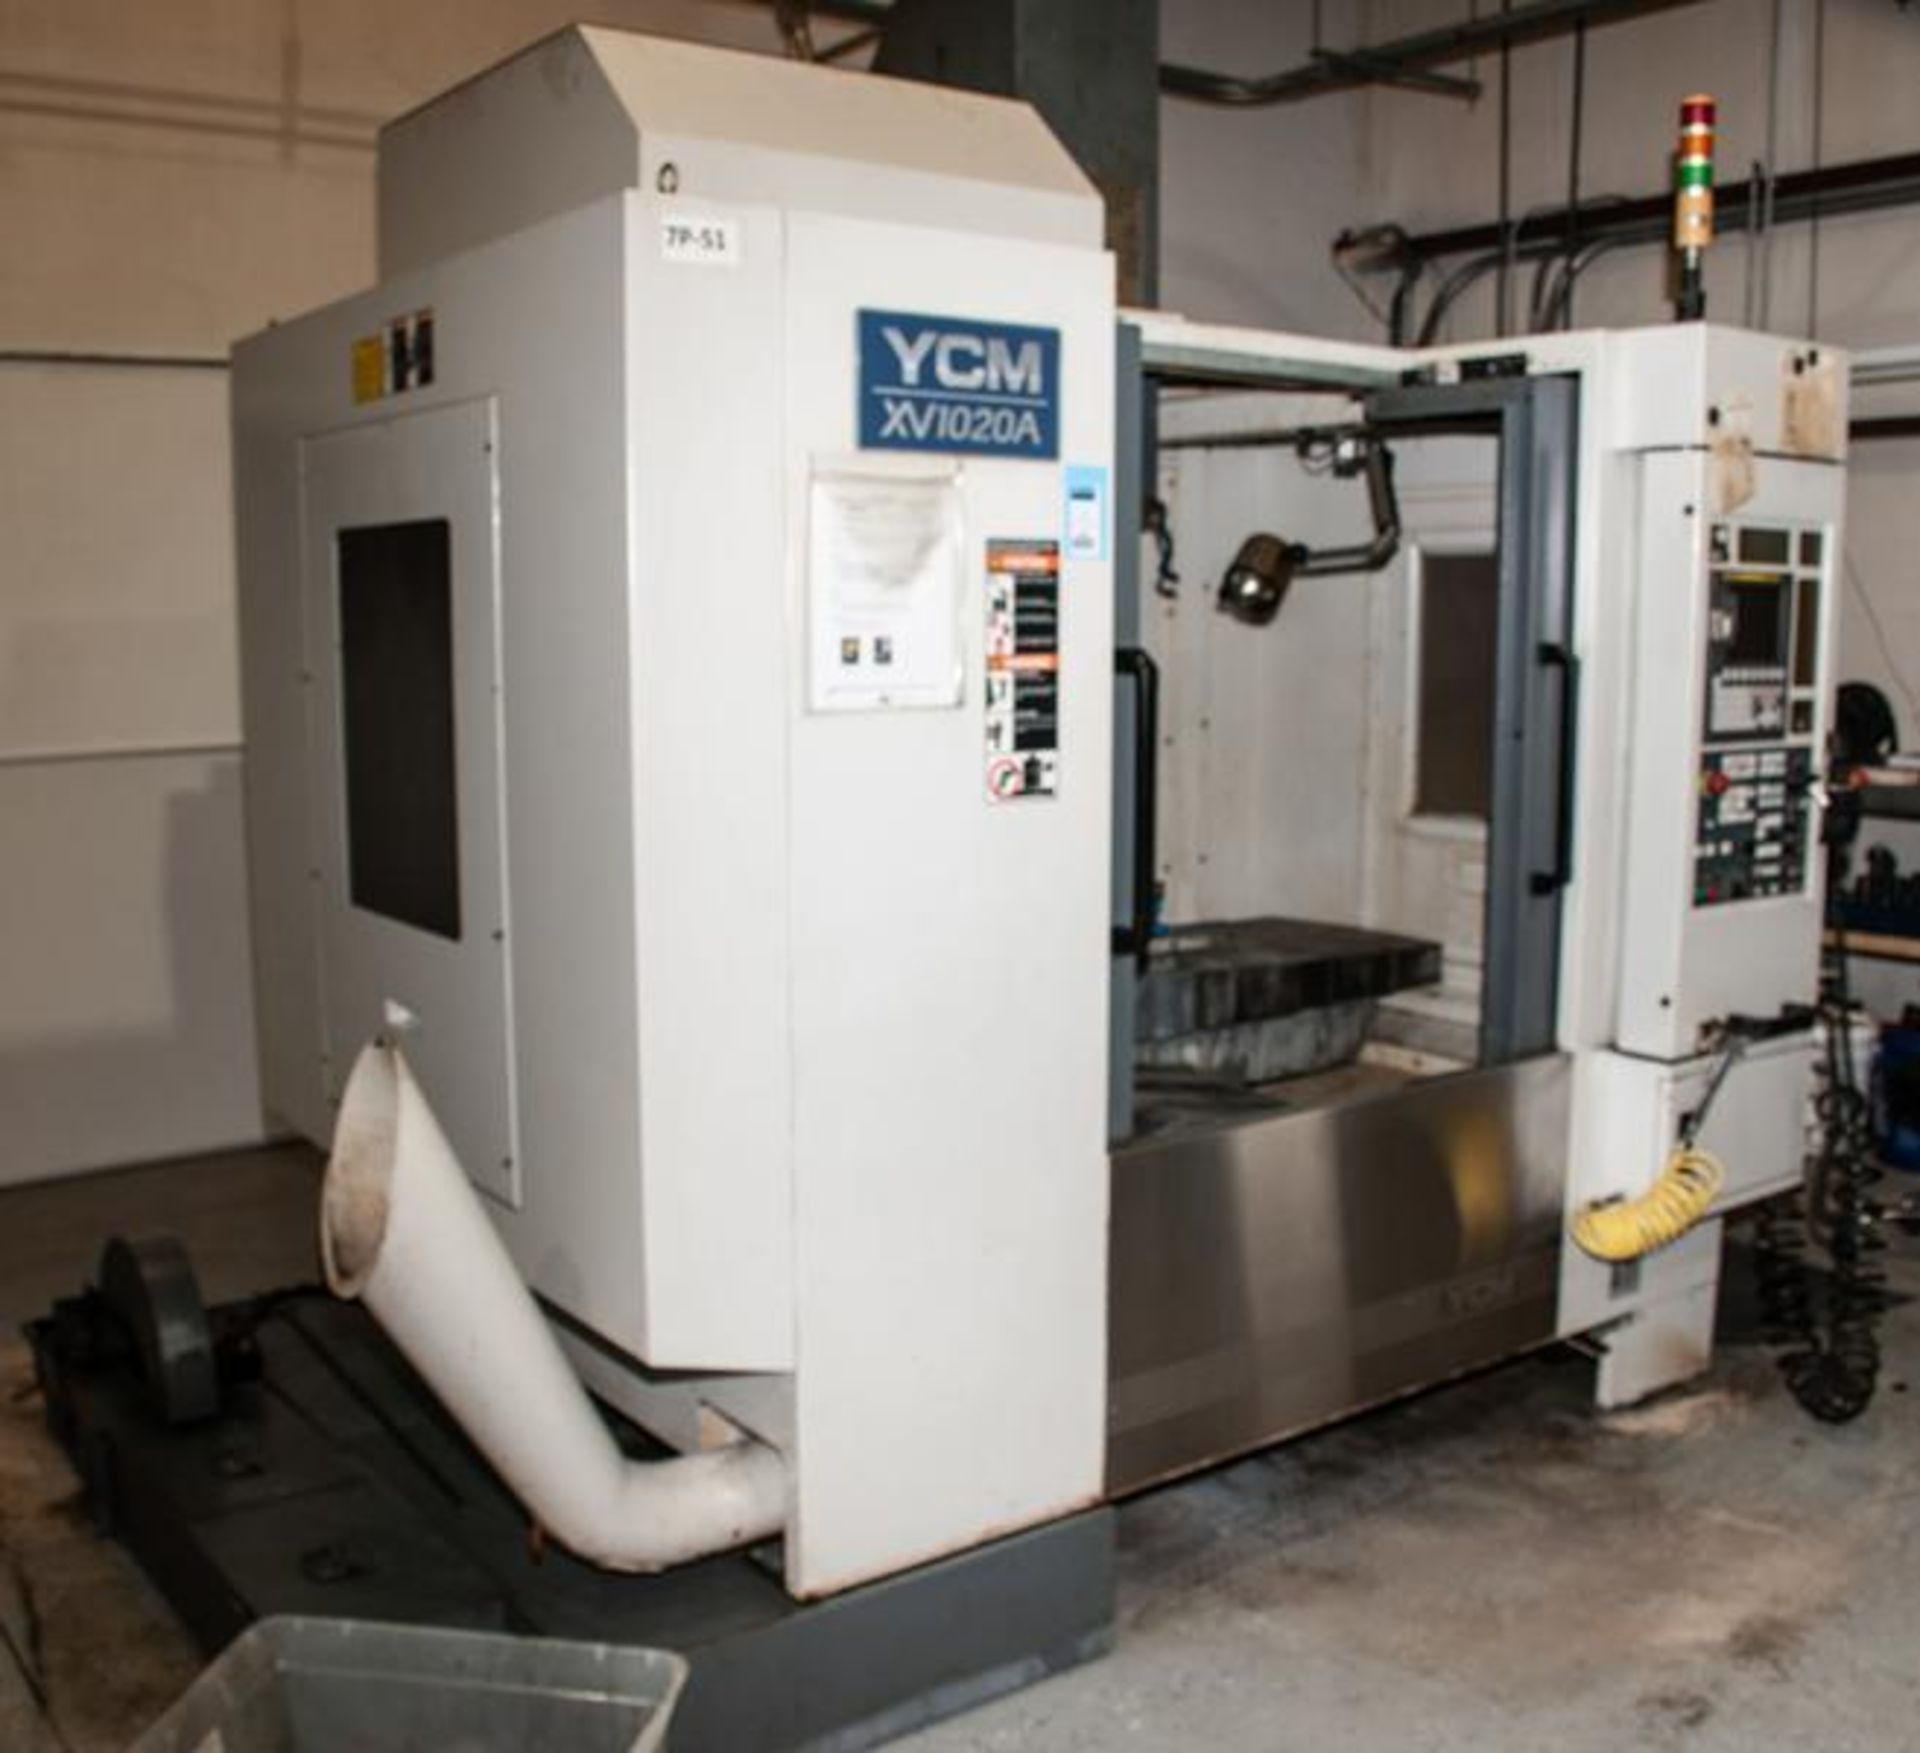 2011 YCM XV1020A, Mfg # 0678 CNC Vert machining center. w/ tool changer, 24 position tool carousel - Image 3 of 17